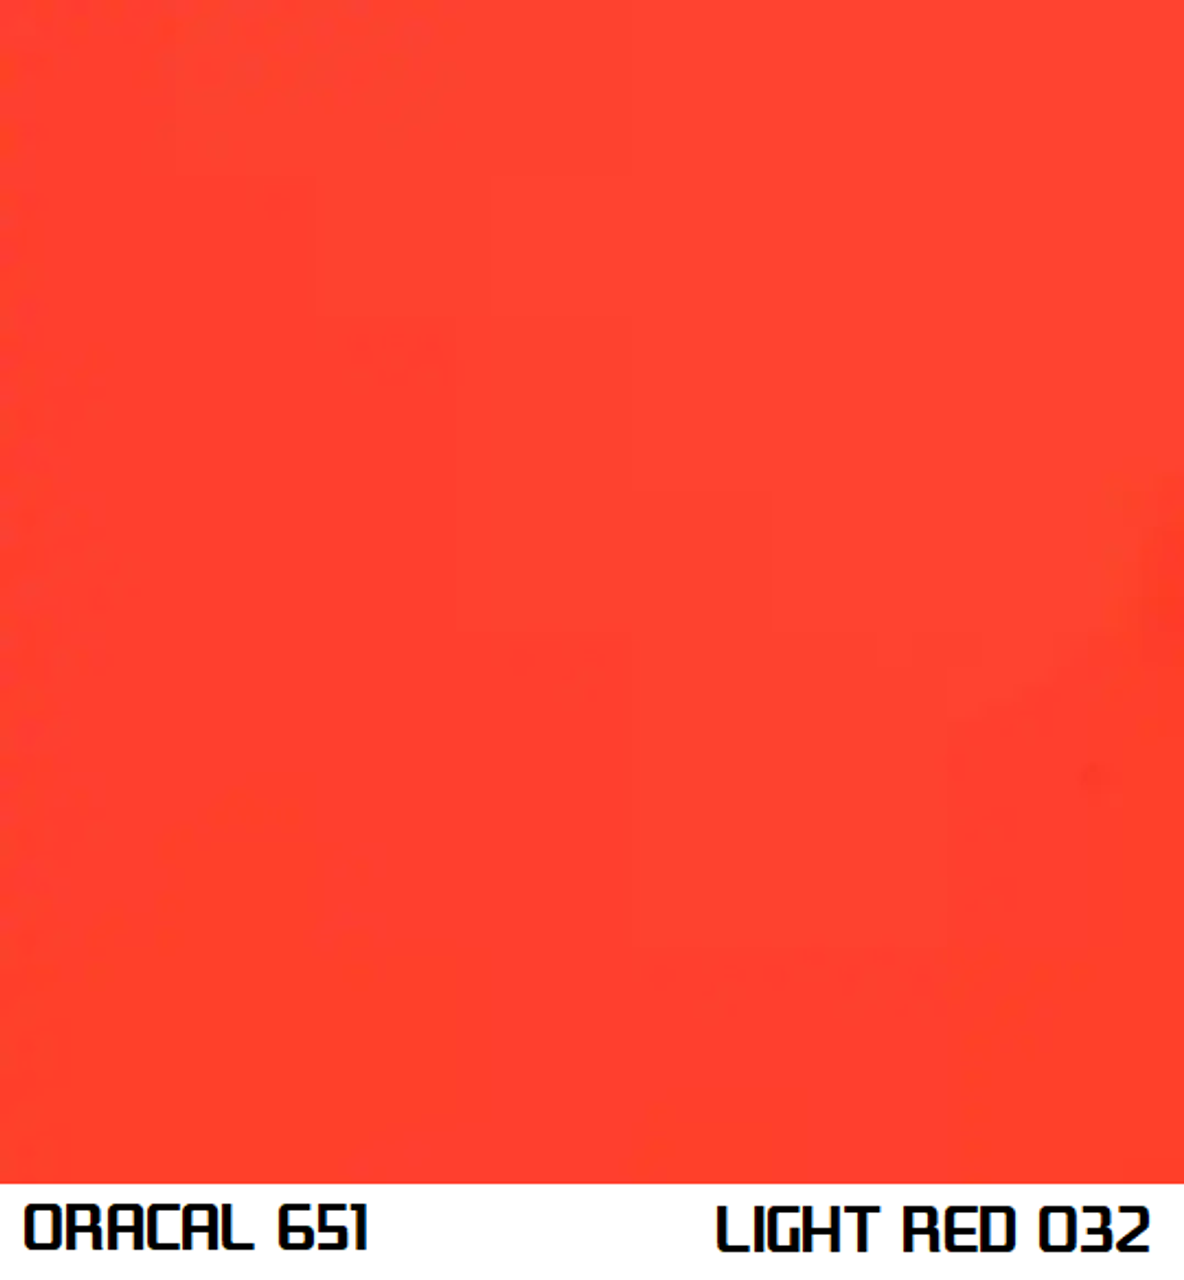 Oracal 651 Permanent Adhesive Vinyl Gloss - Light Red 032 - JDMFV